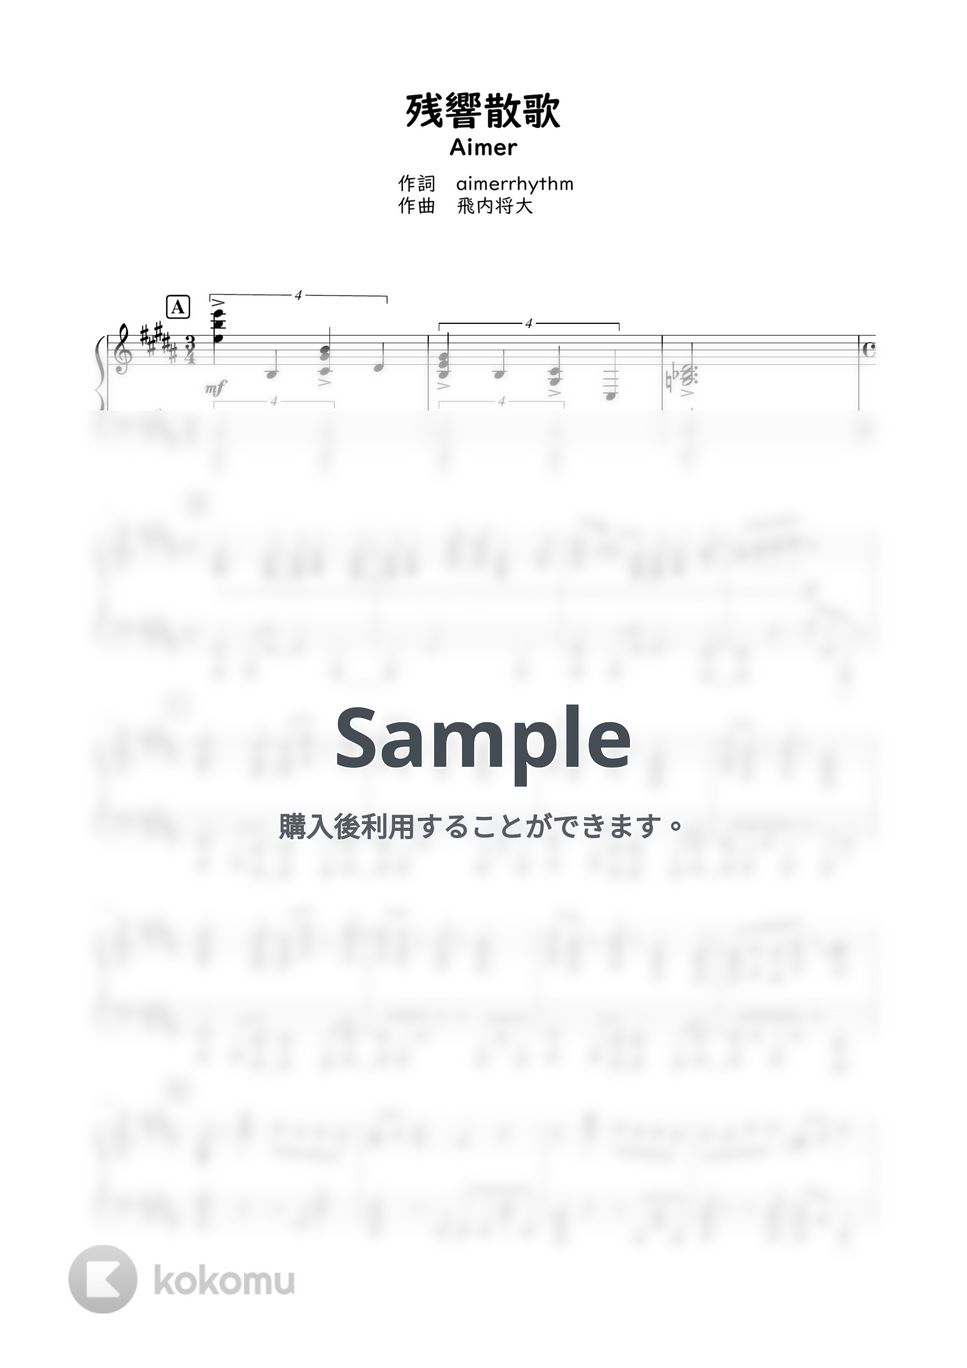 Aimer - 残響散歌 by SHIRO